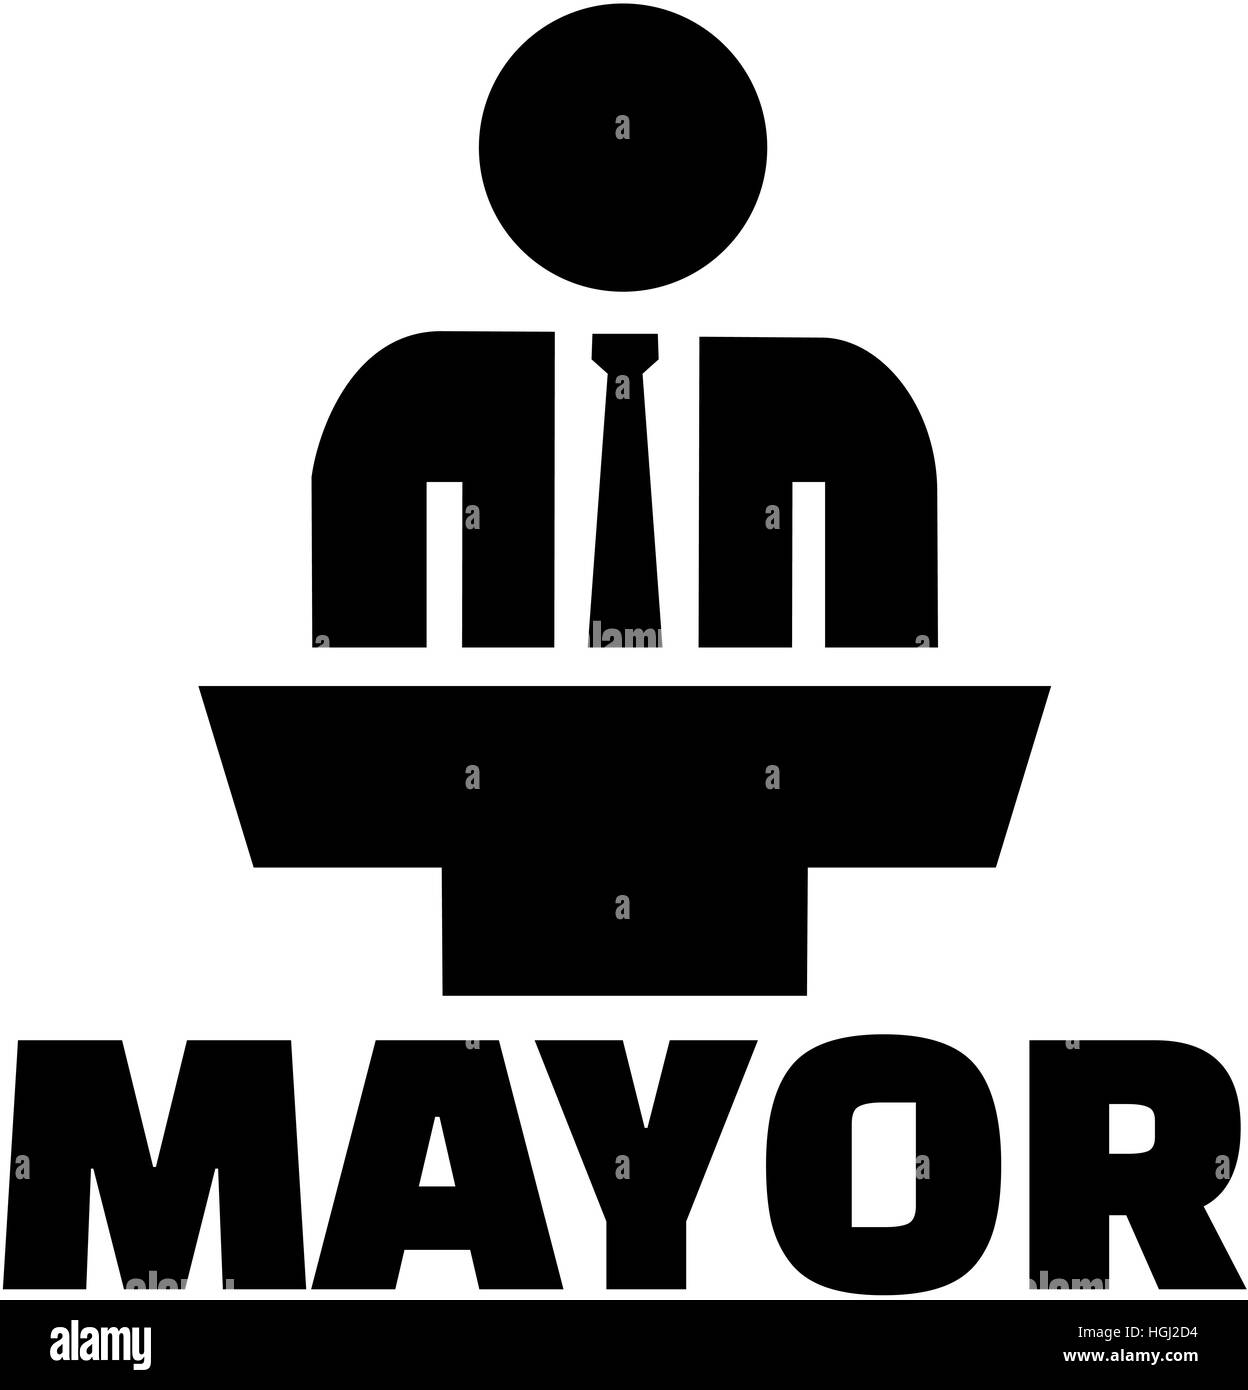 Mayor word with icon Stock Photo